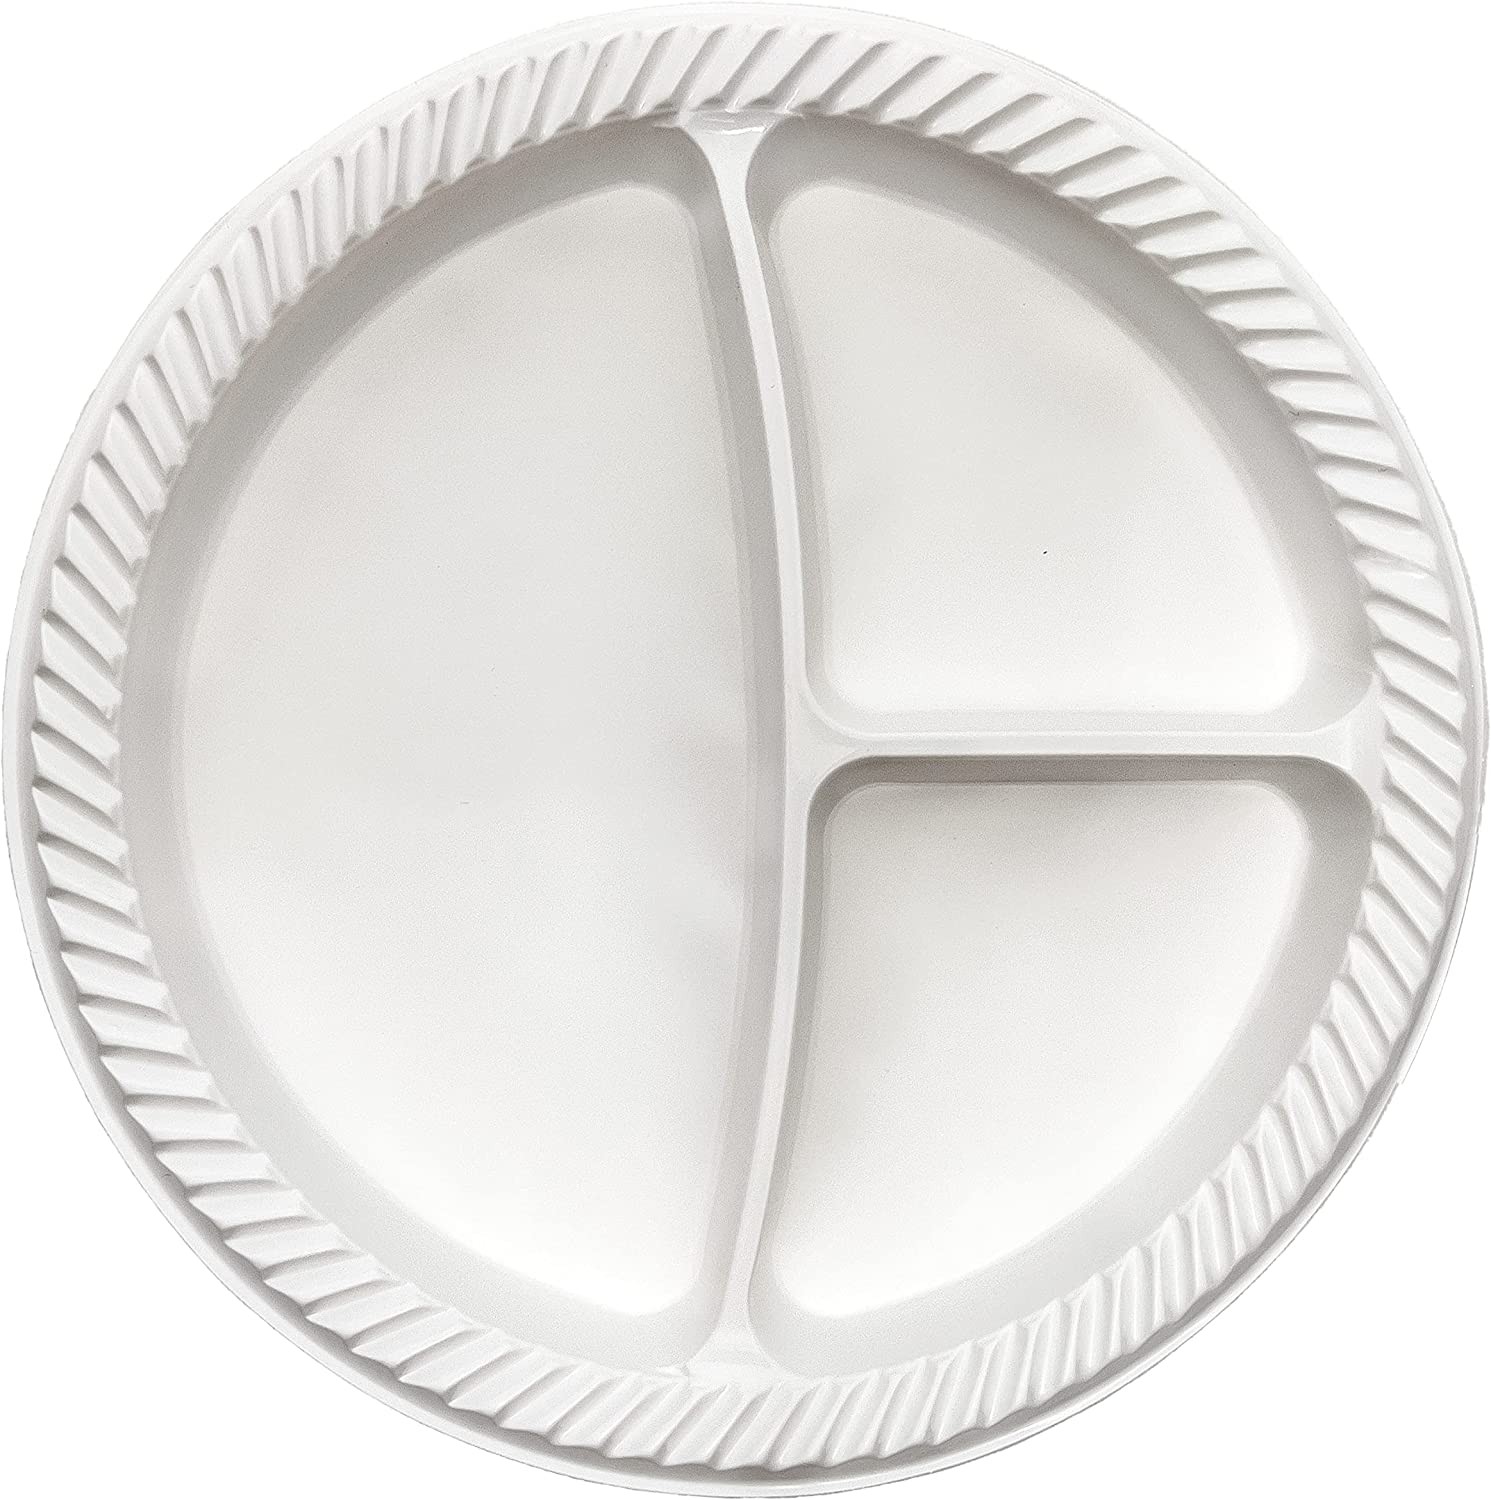 TigerChef White Plastic 3 Compartment Divided Plates, 56/Plates